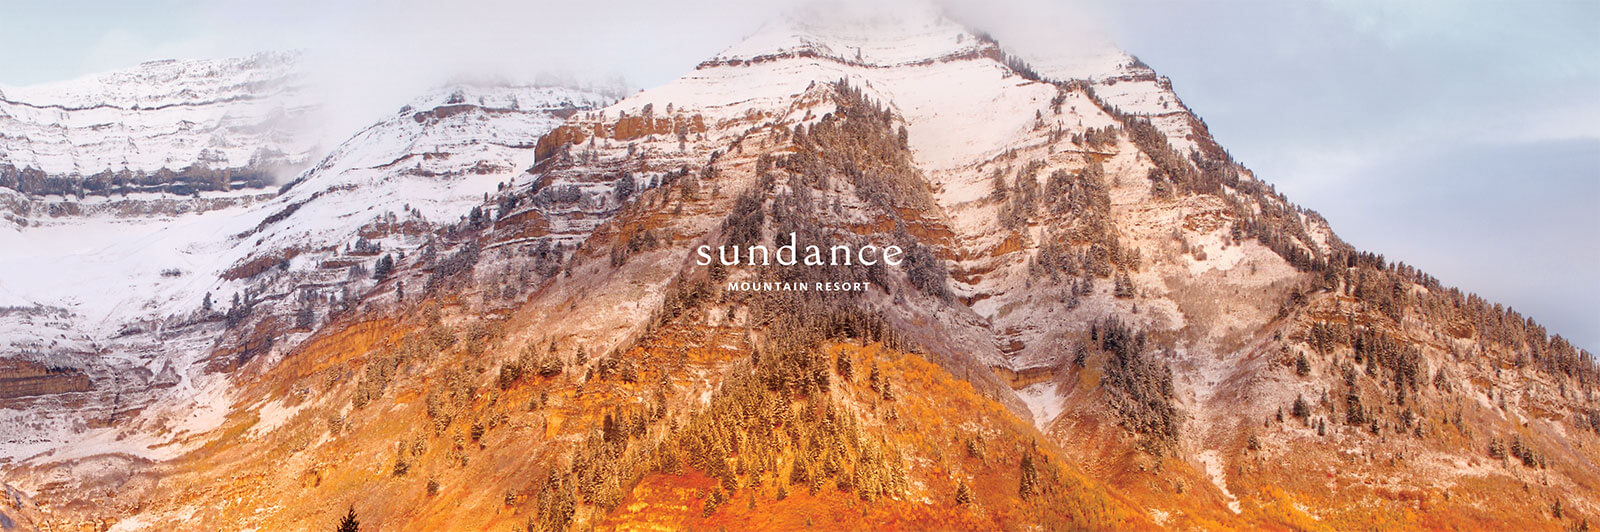 Snow-capped mountain range image with Sundance Resort logo